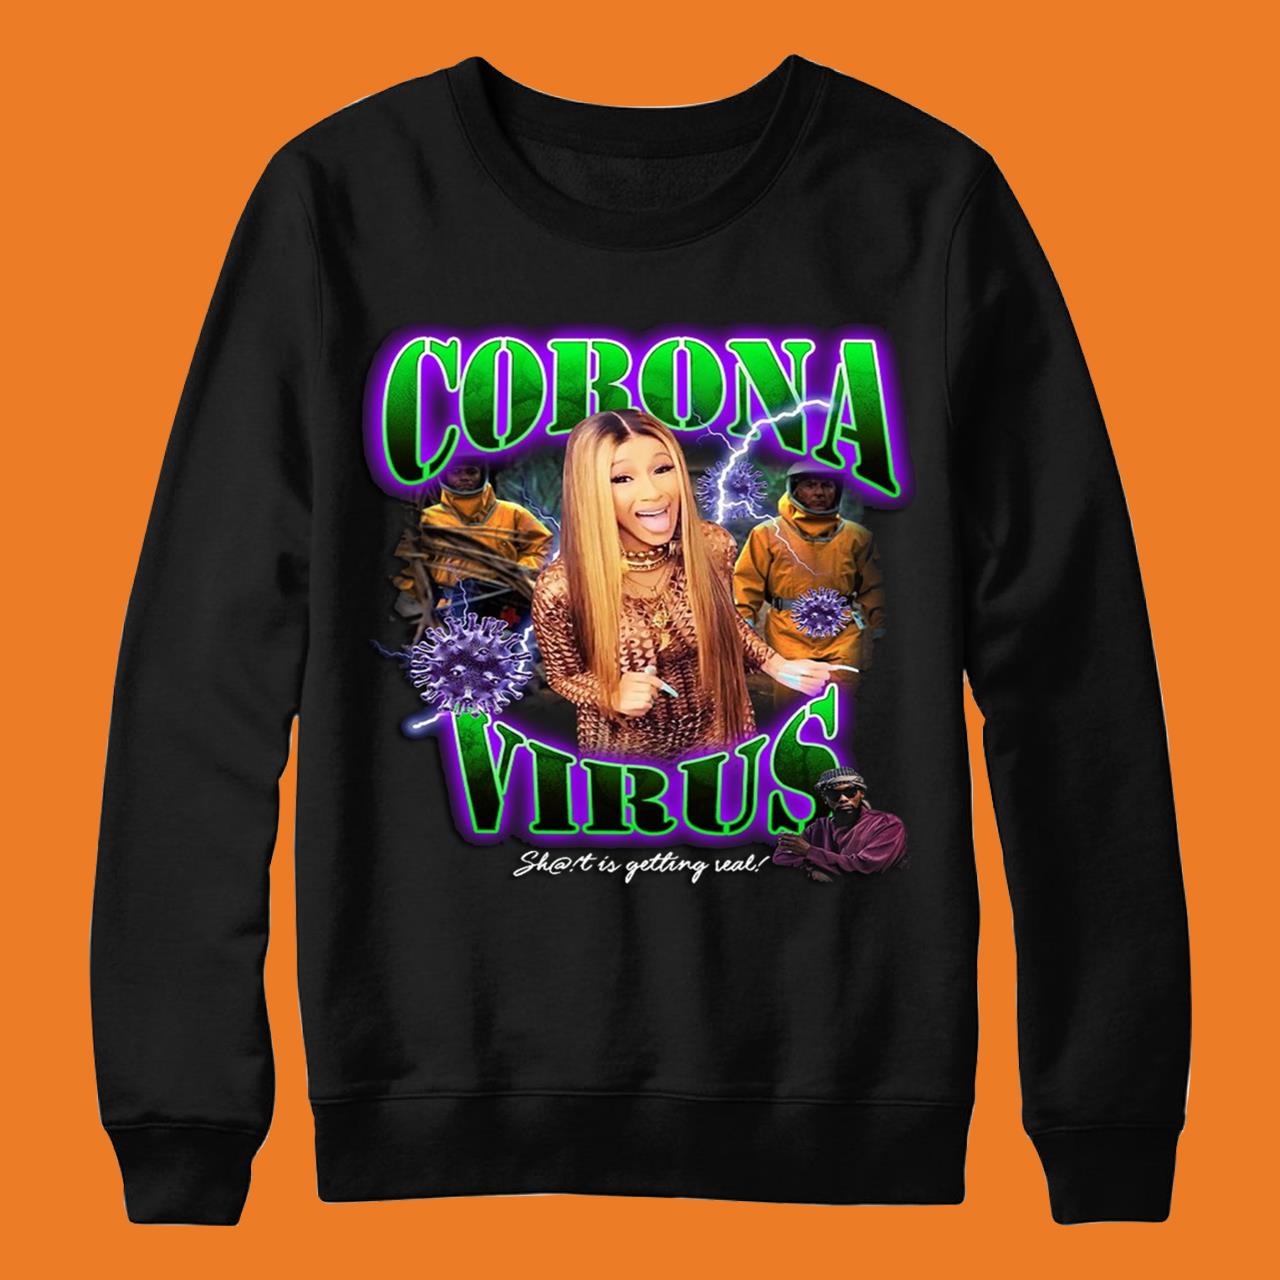 Cardi B Corona Virus Funny Classic T-Shirt